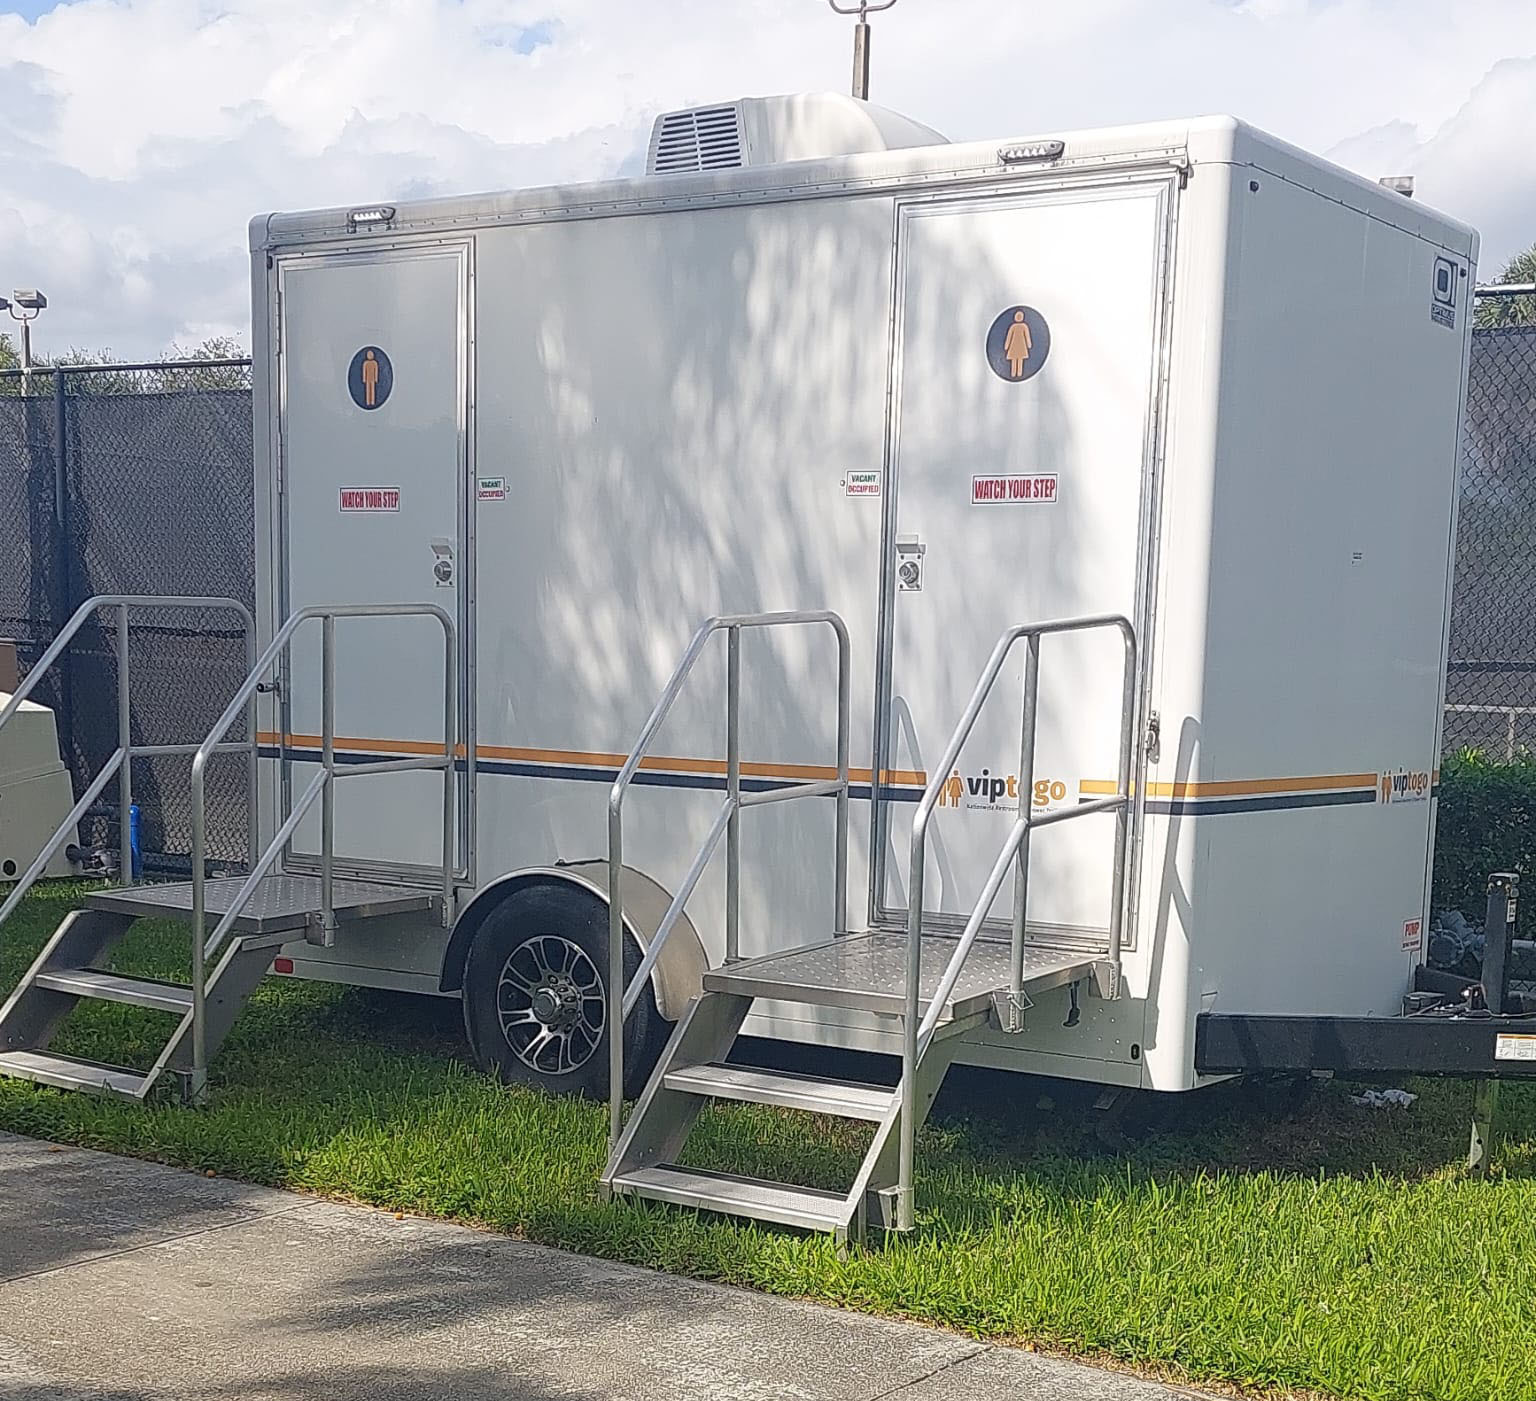 restroom trailer rental for Edison, New Jersey needs